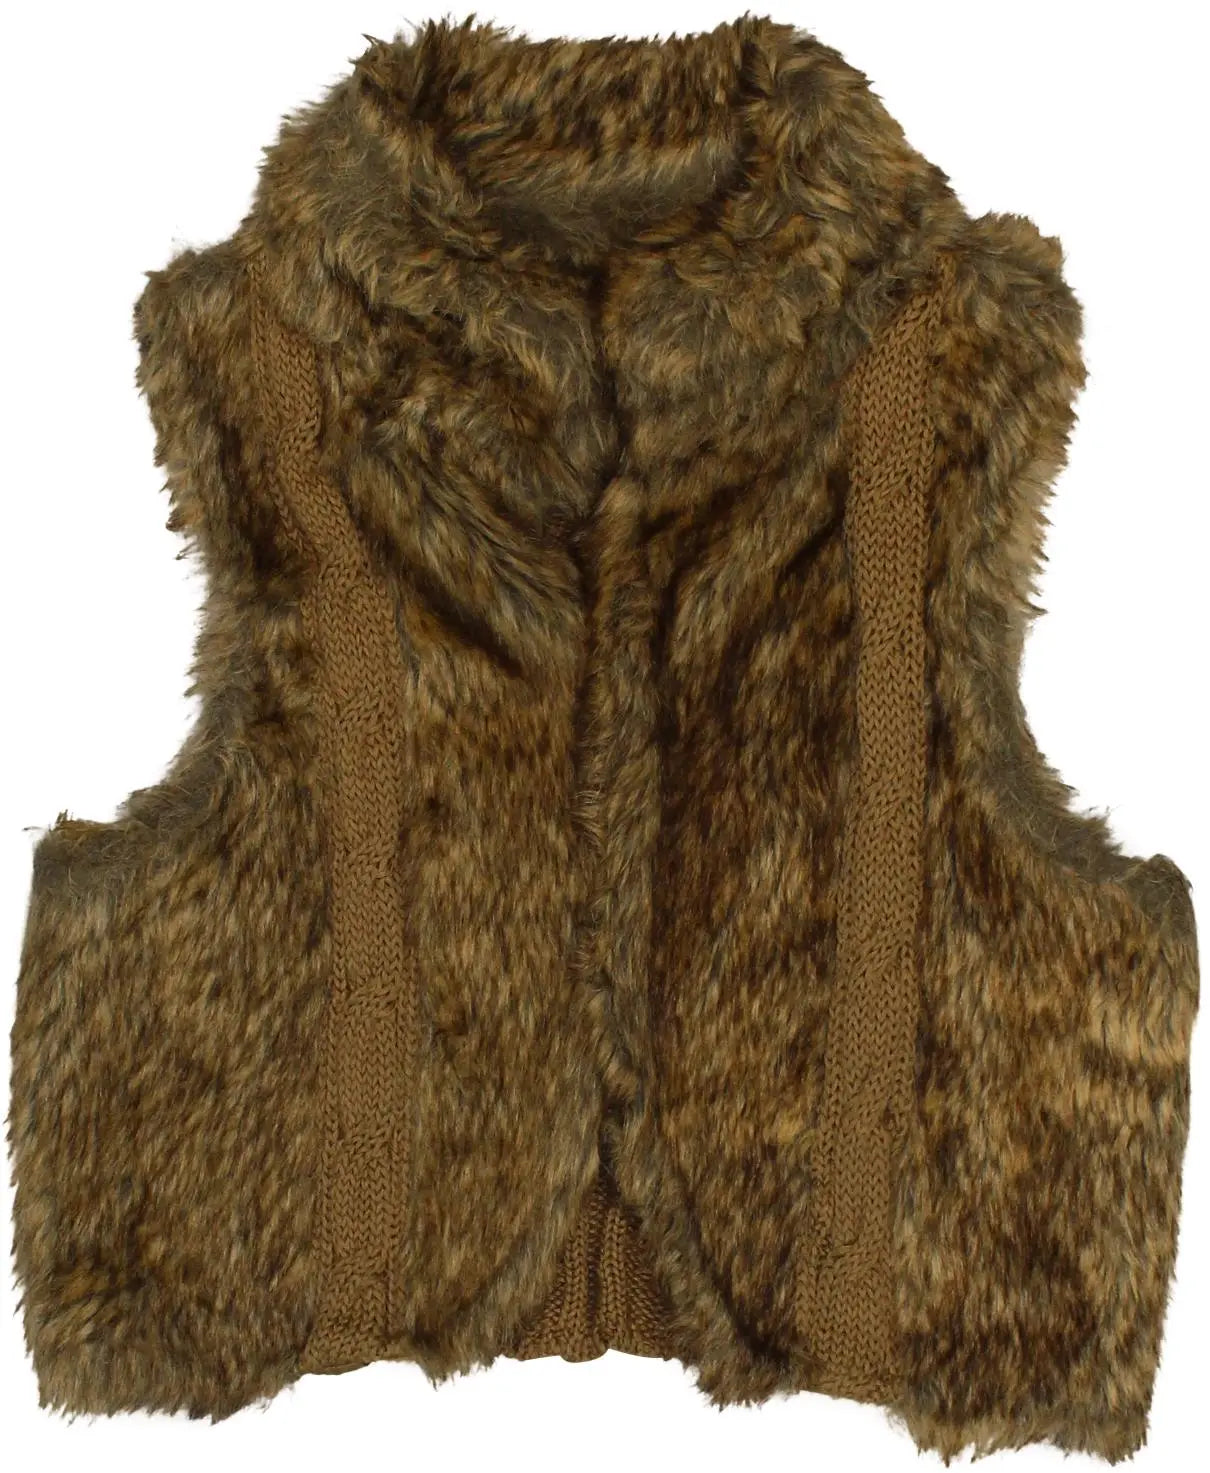 Royal Chicks - Faux Fur Vest- ThriftTale.com - Vintage and second handclothing